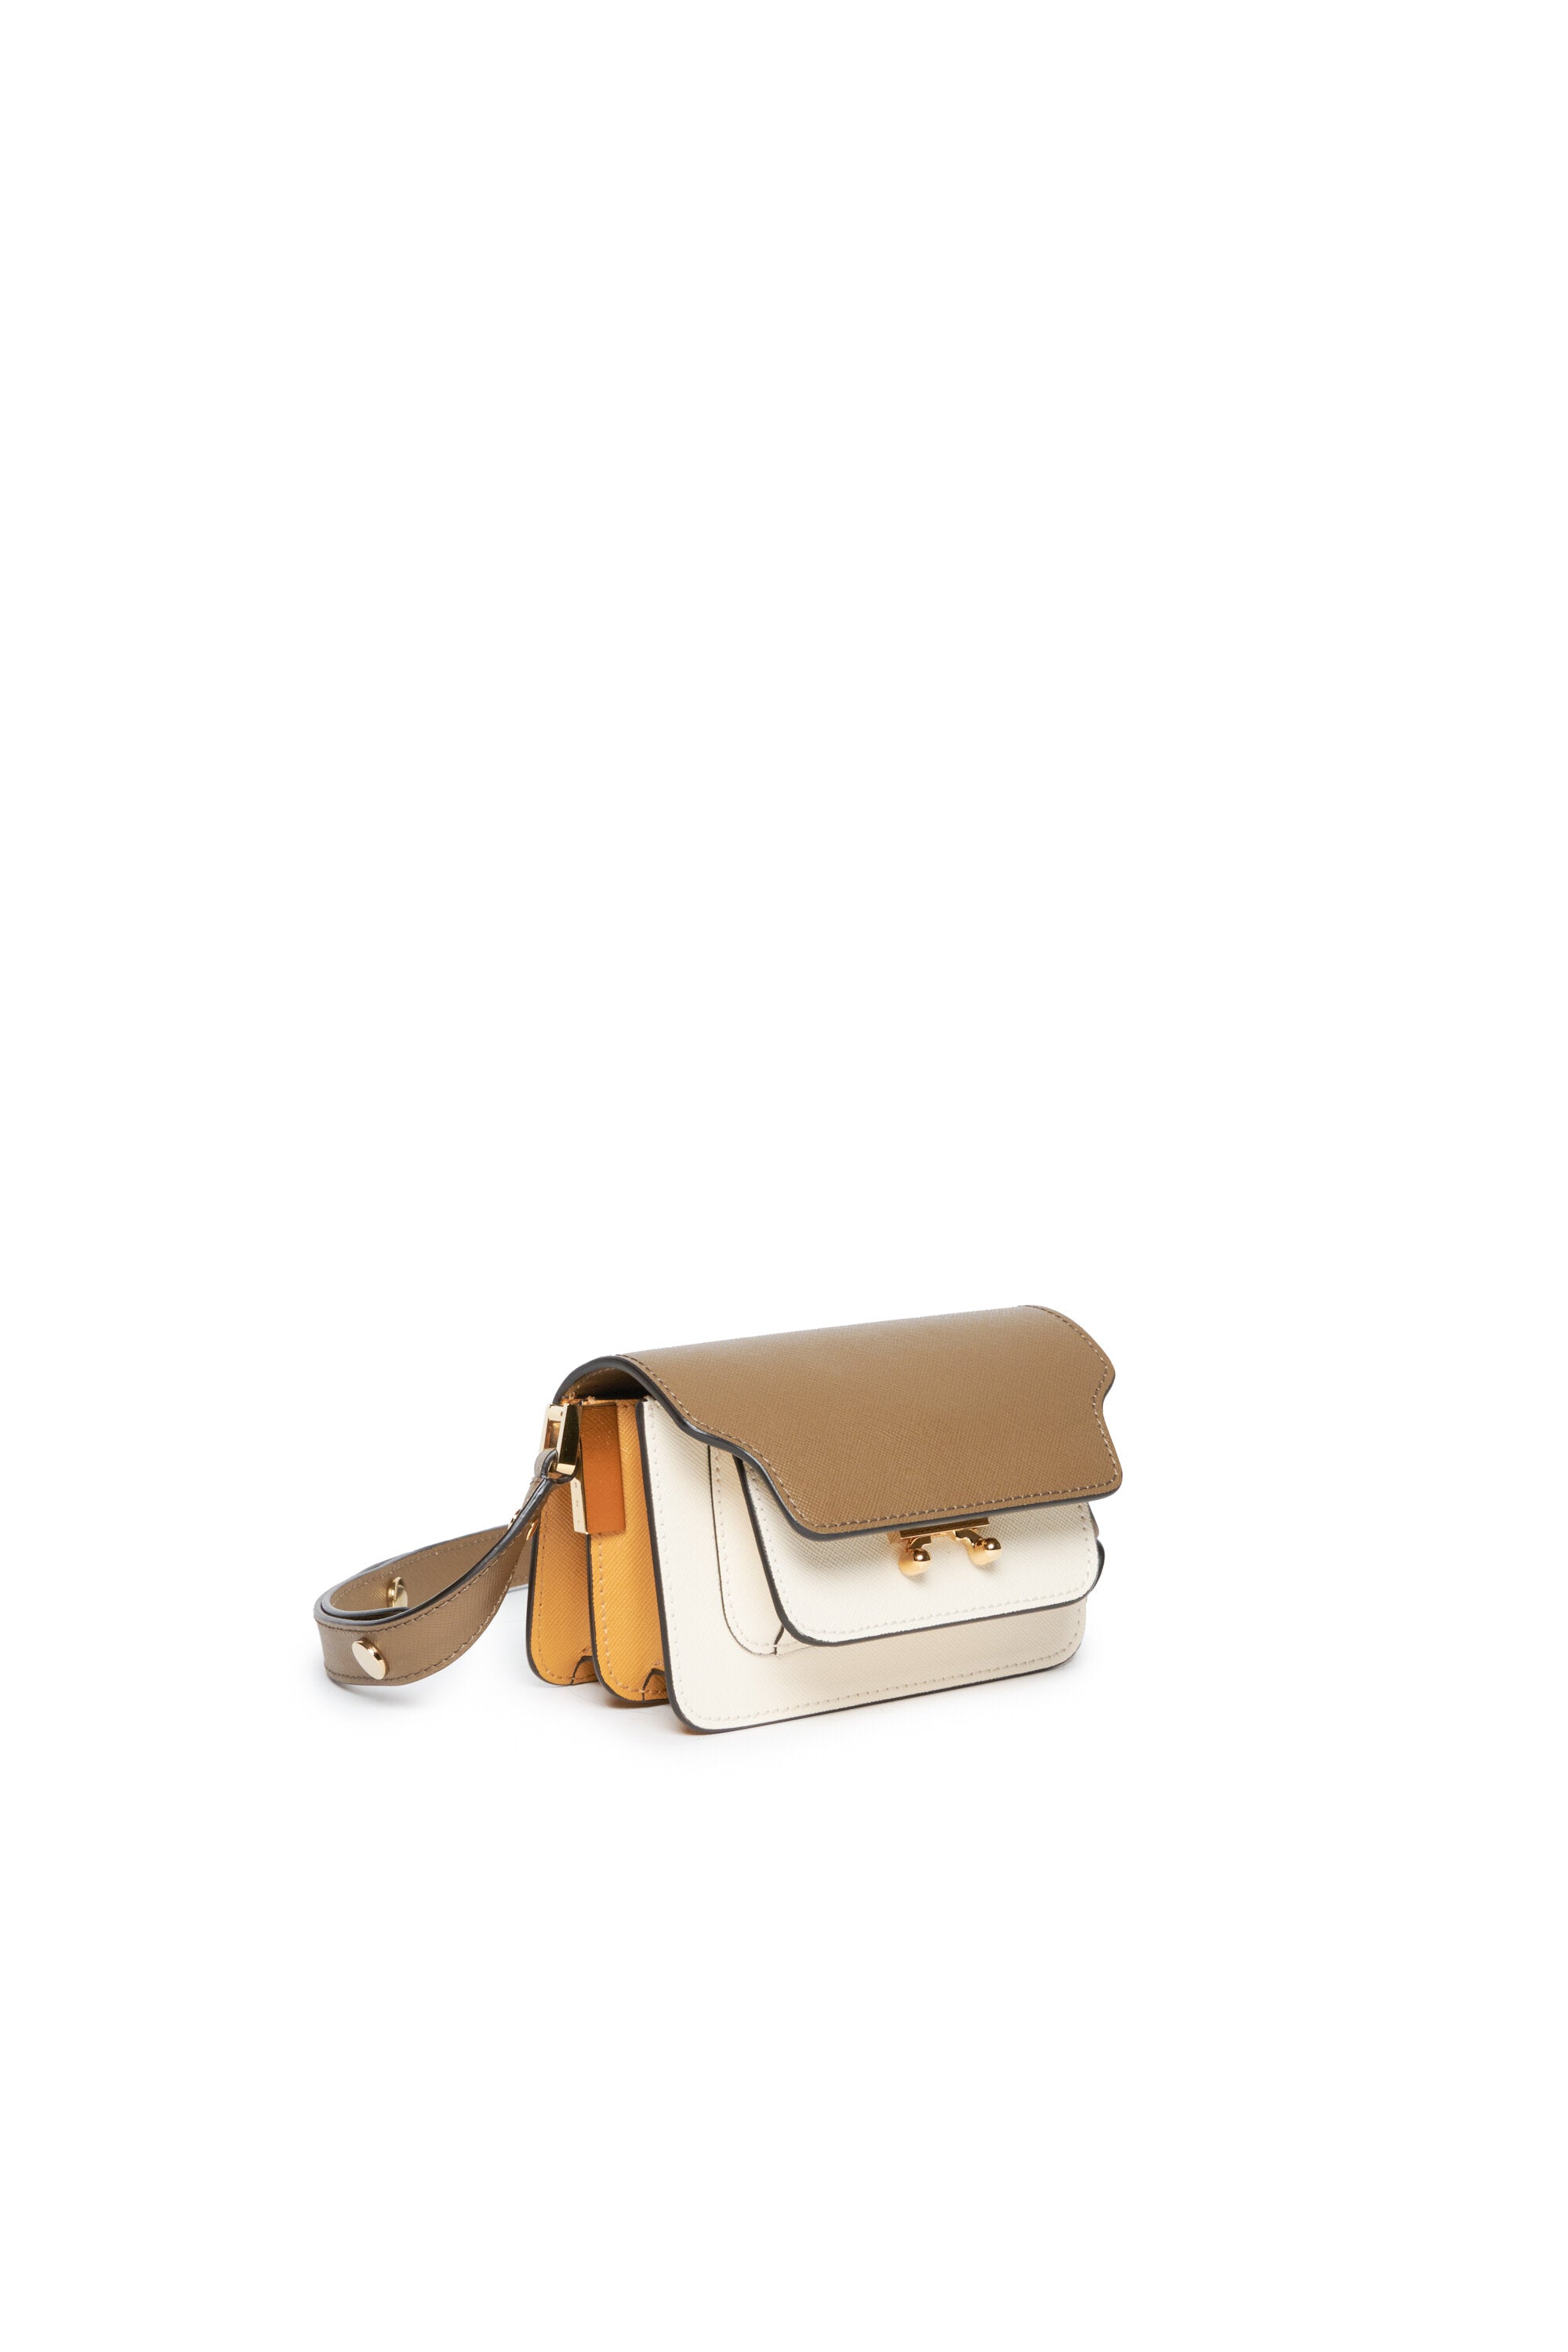 Marni girl Trunk bag in saffiano leather | BRAVE KID